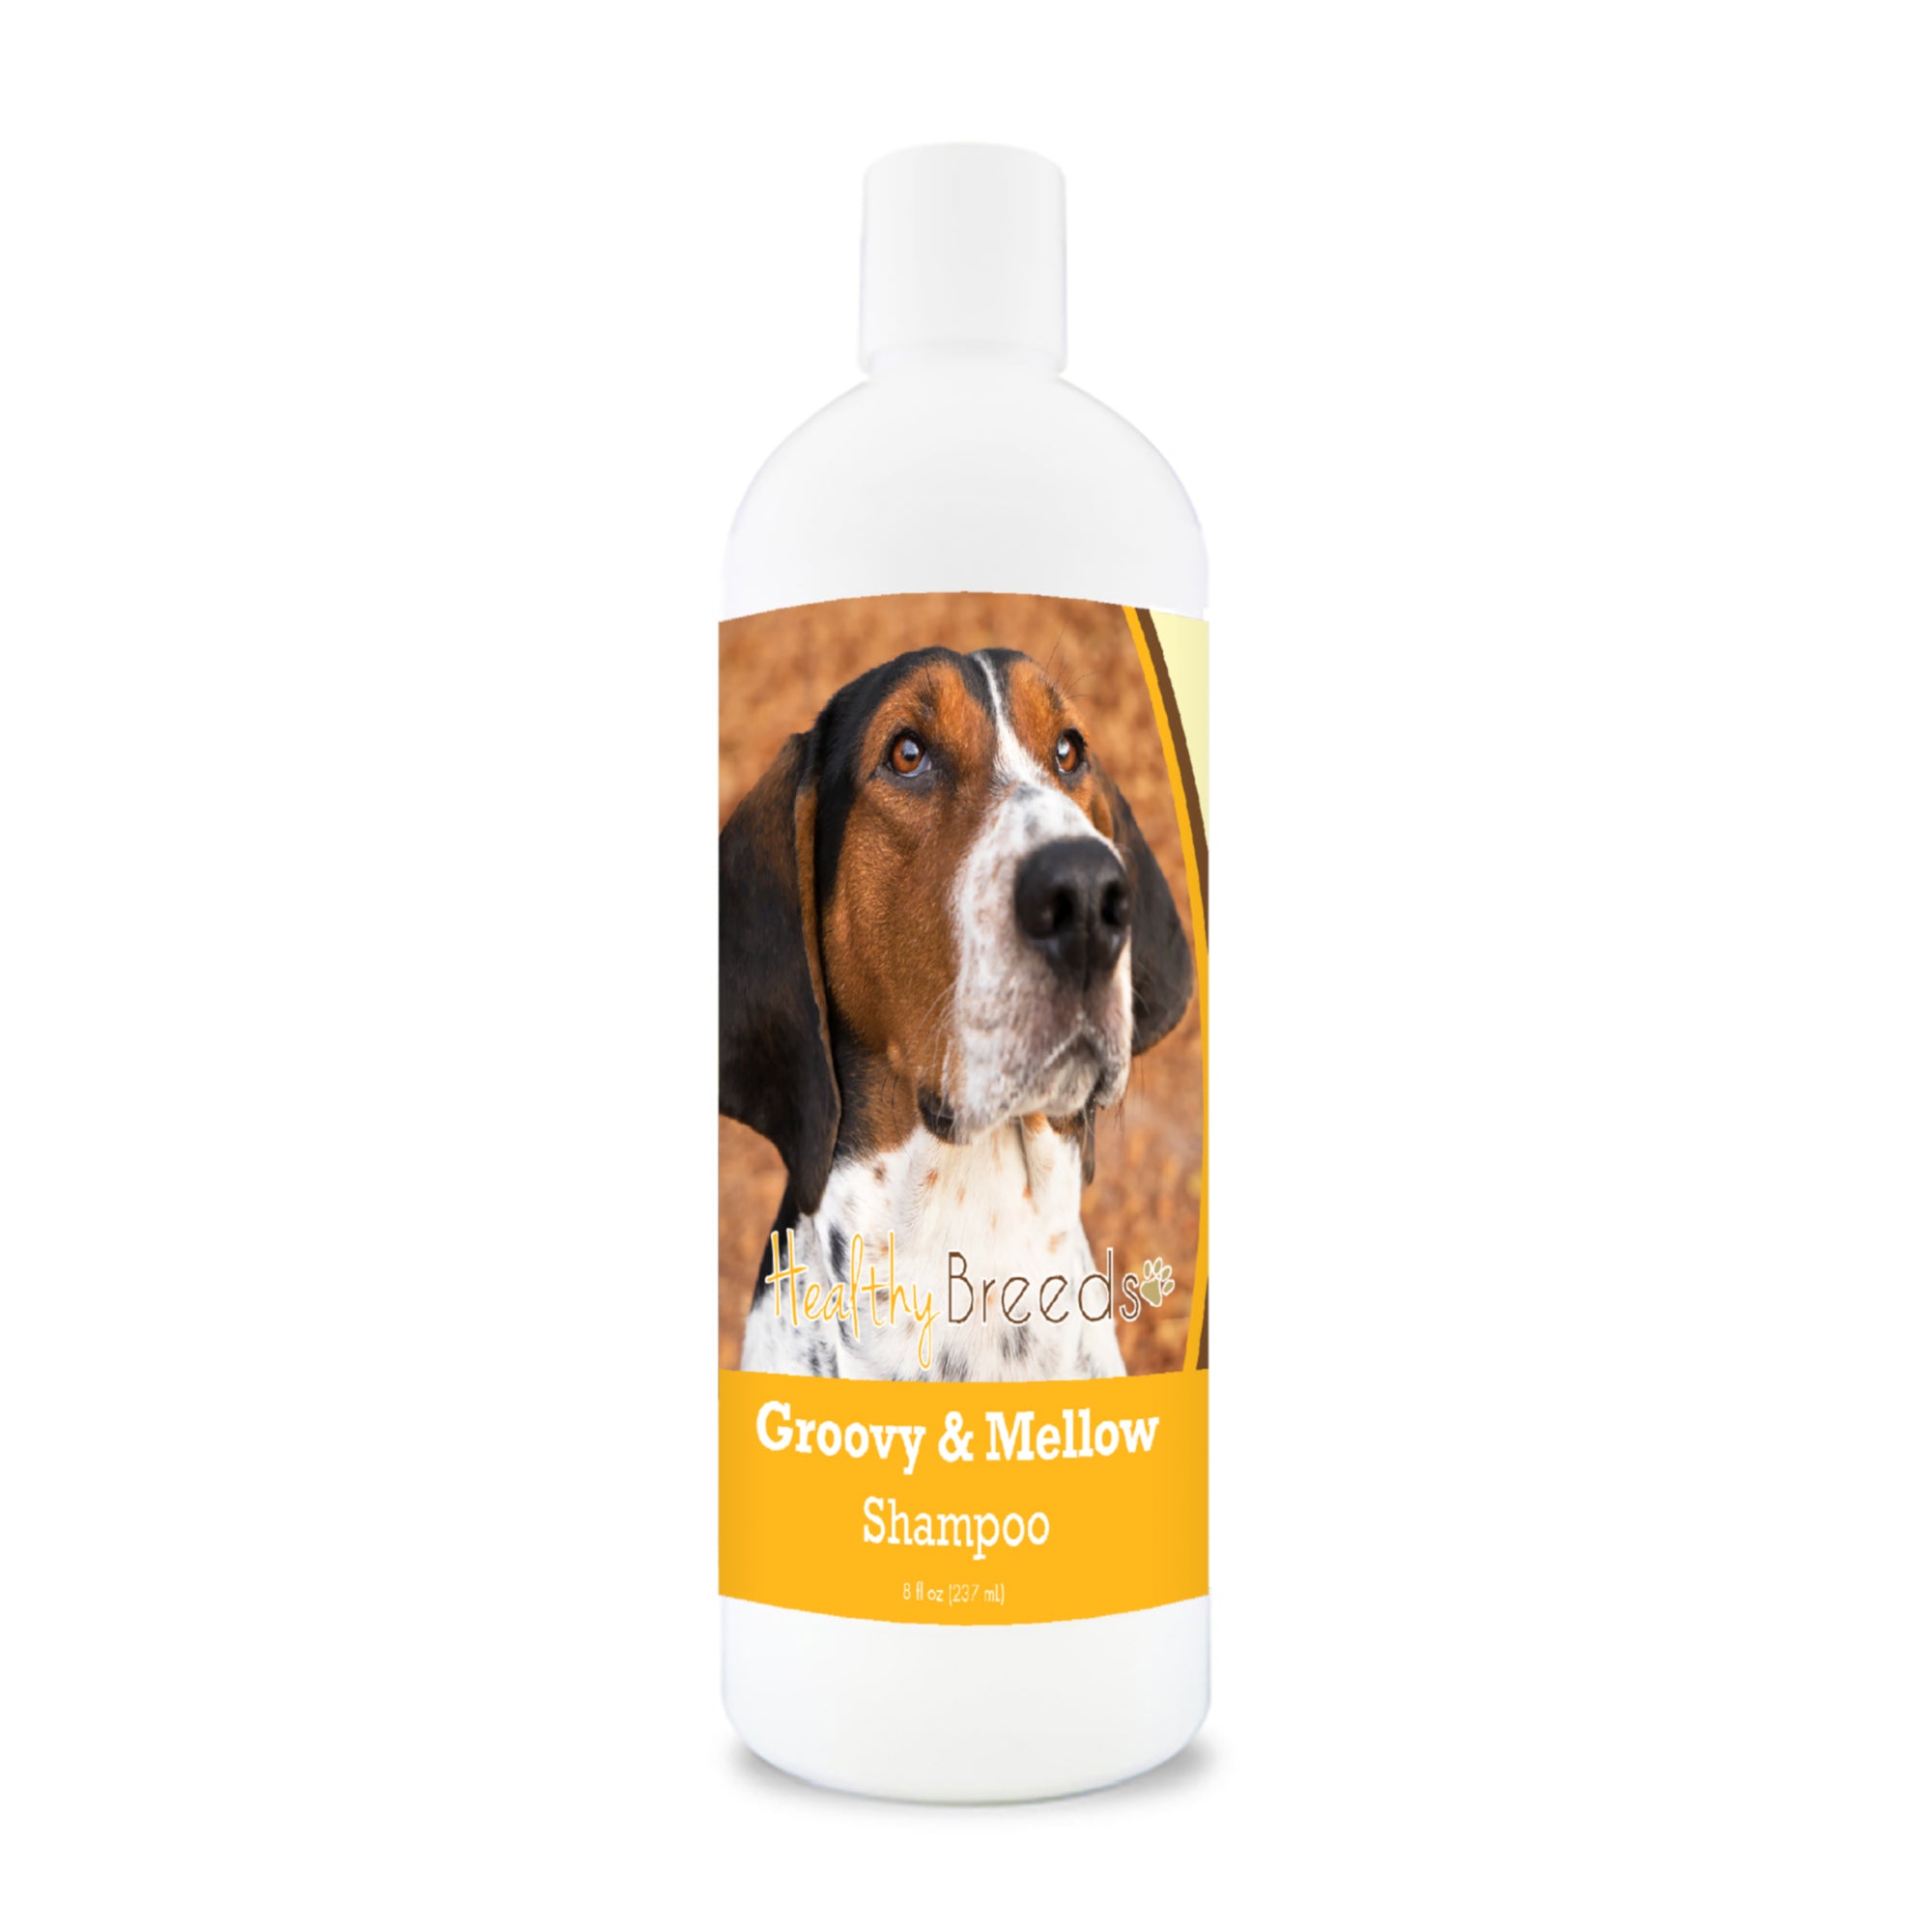 Treeing Walker Coonhound Groovy & Mellow Shampoo 8 oz